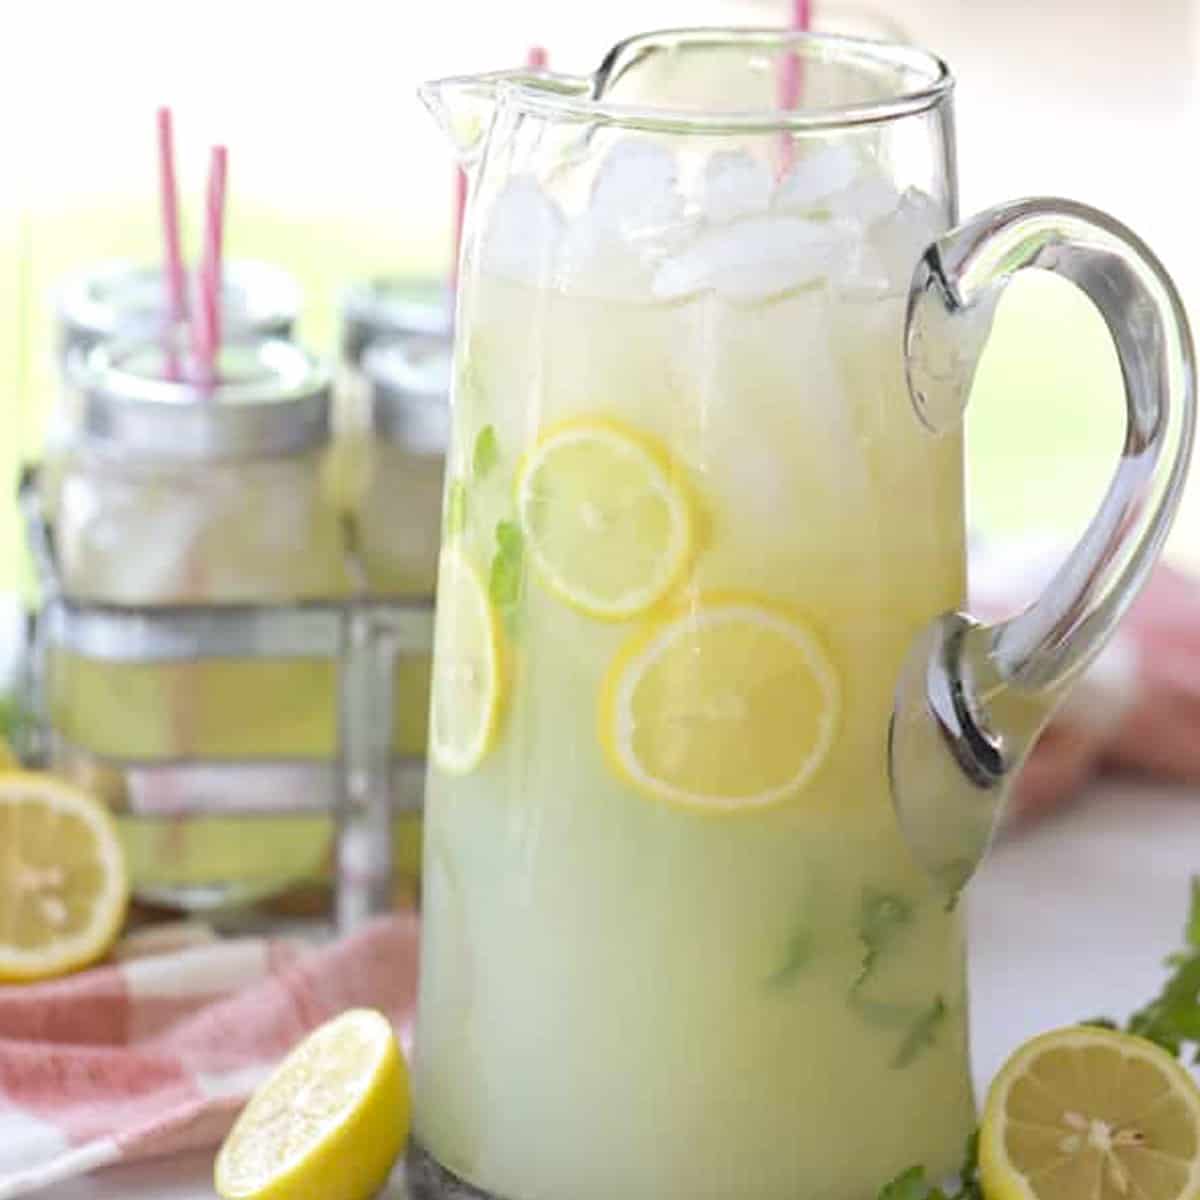 Mint lemonade is made with simple ingredients